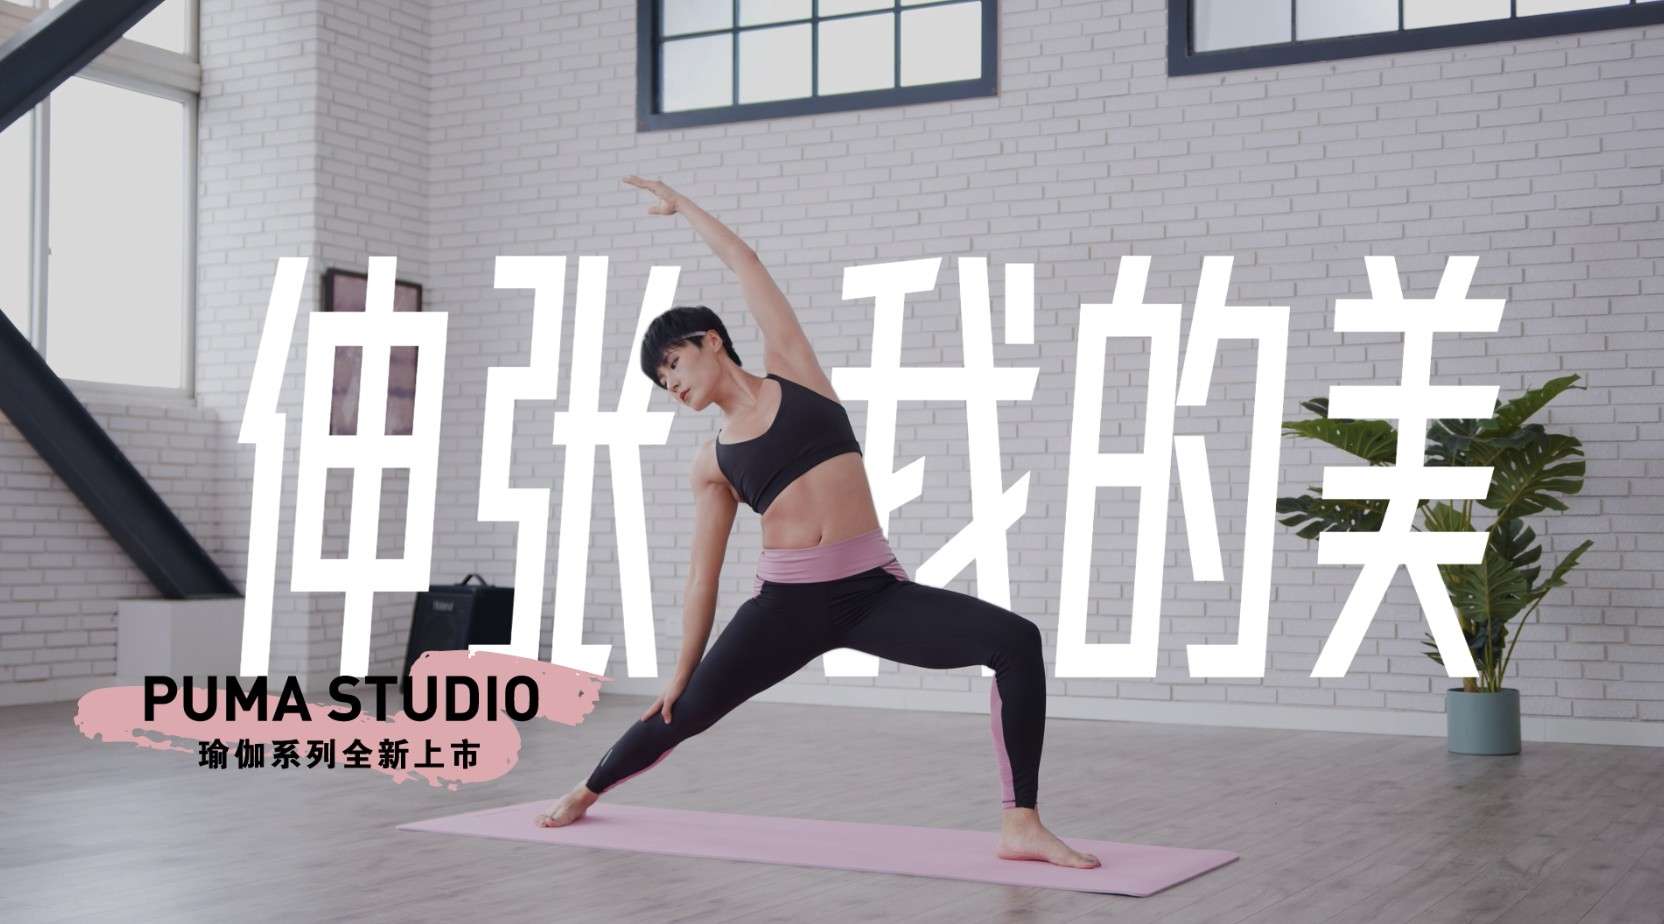 PUMA STUDIO 瑜伽系列新品上市